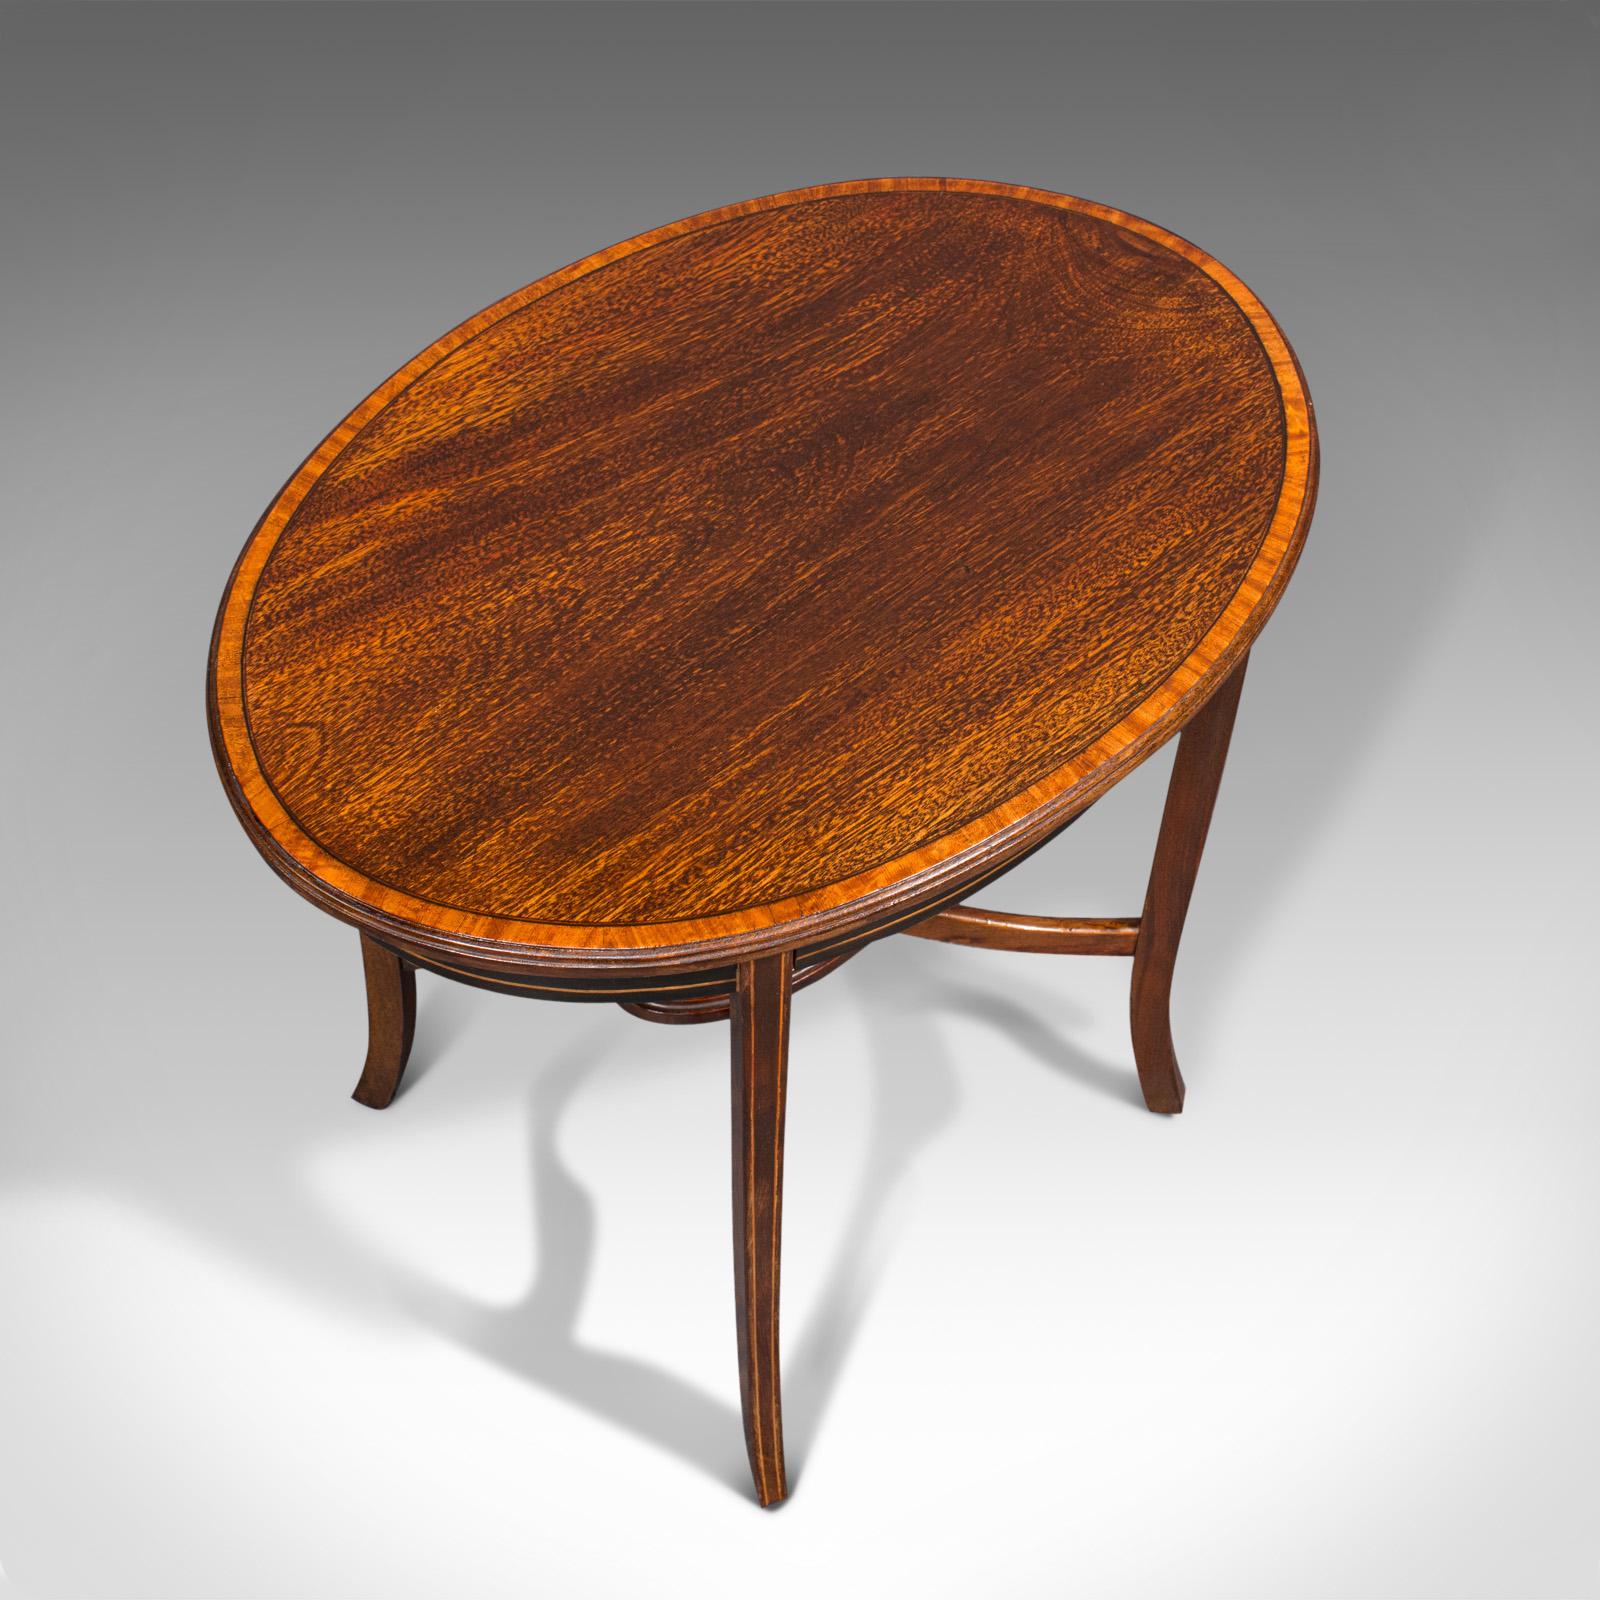 Antique Side Table, English, Mahogany, Walnut, Lamp, Occasional, Regency, C.1820 1